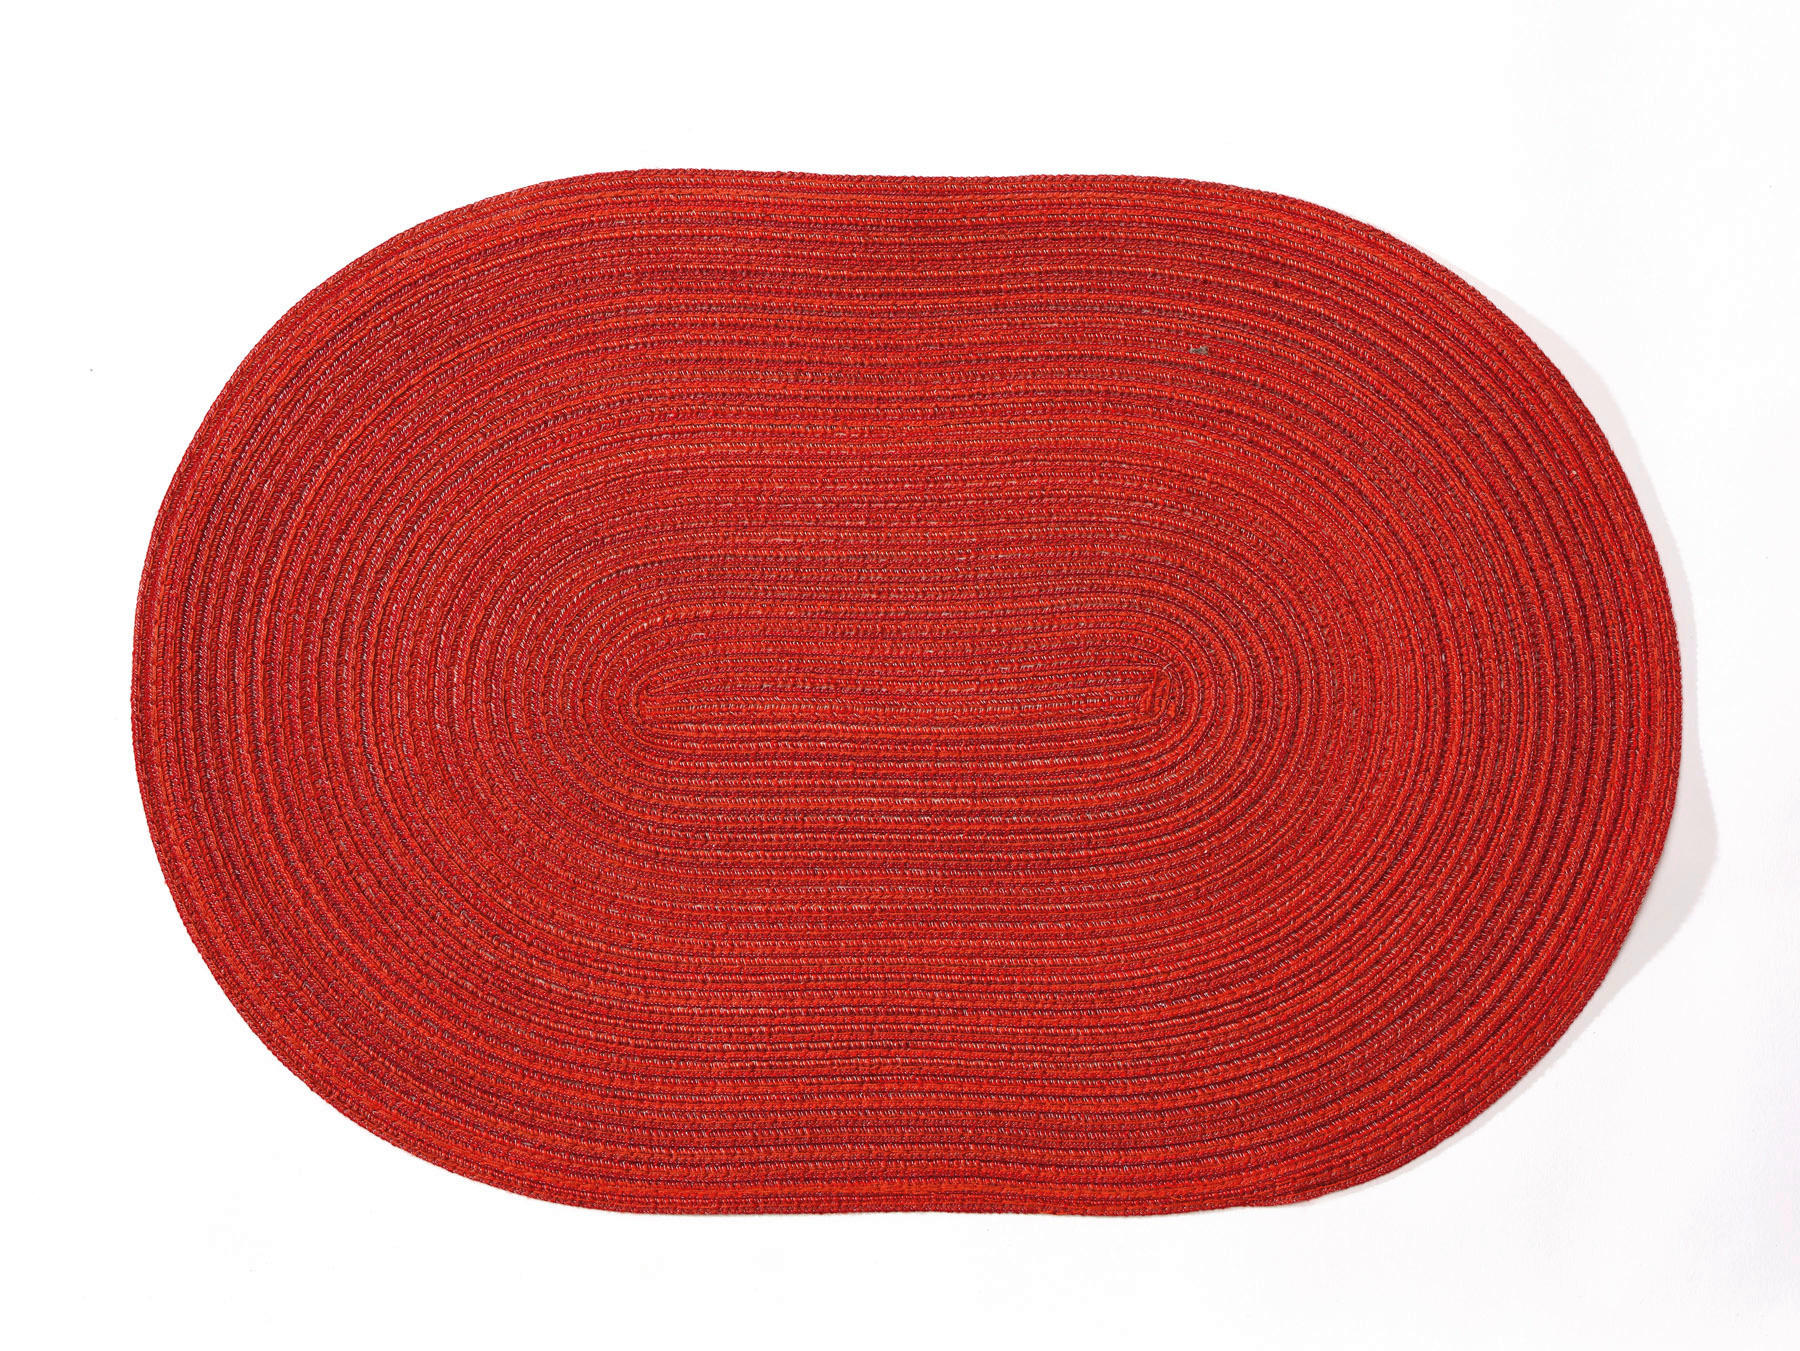 TISCHSET Textil Textilgeflecht Rot 48/33 cm  - Rot, Basics, Textil (48/33cm)